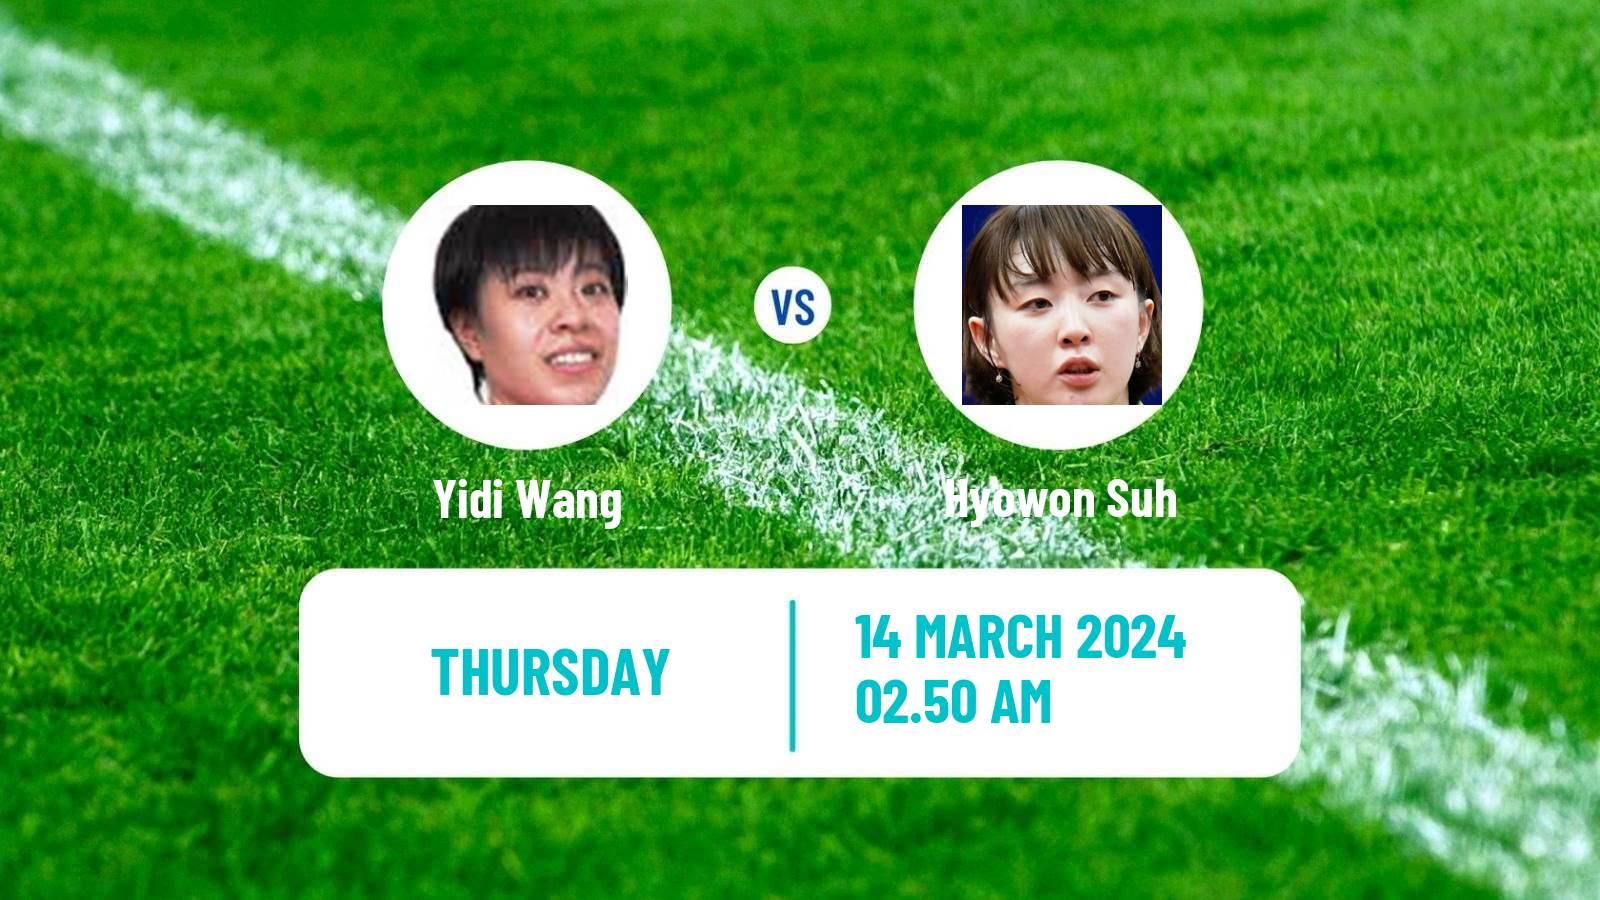 Table tennis Singapore Smash Women Yidi Wang - Hyowon Suh